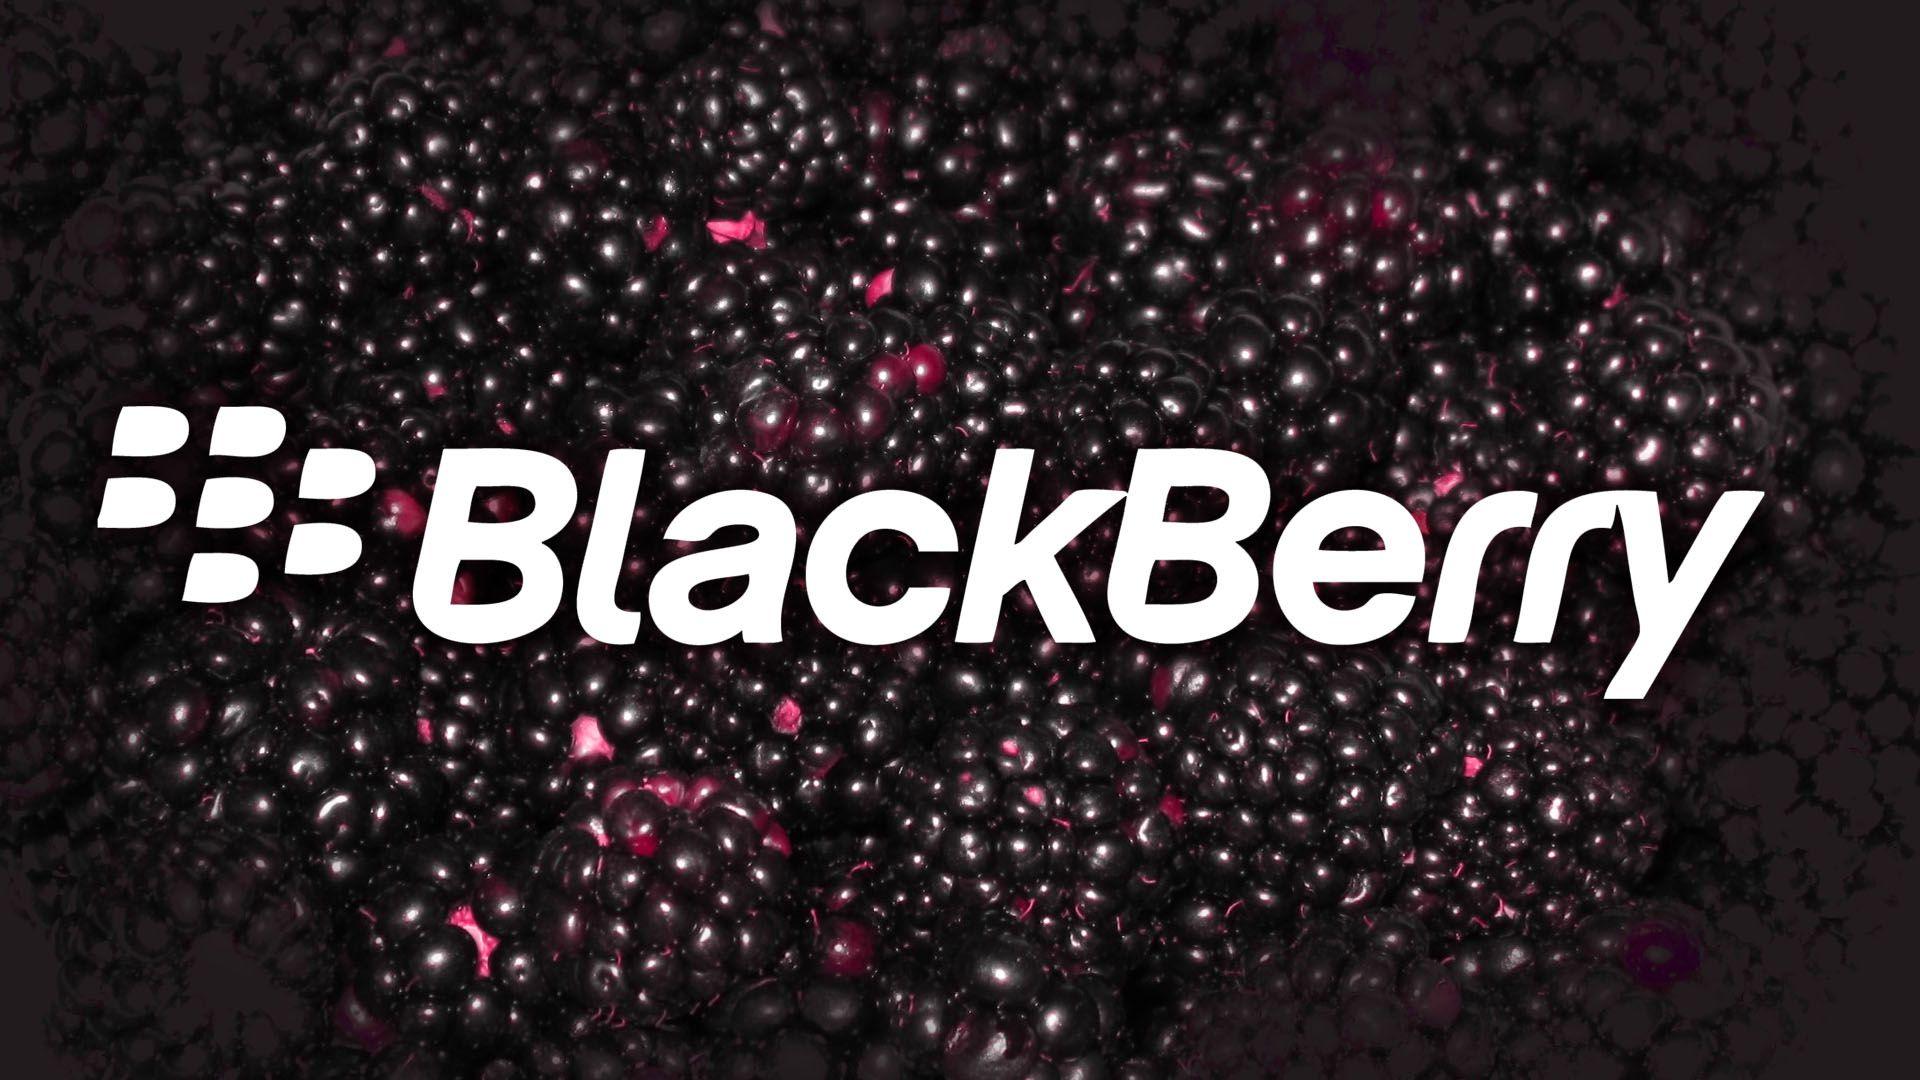 BlackBerry Wallpaper For Mobile, Download BlackBerry HD Wallpaper